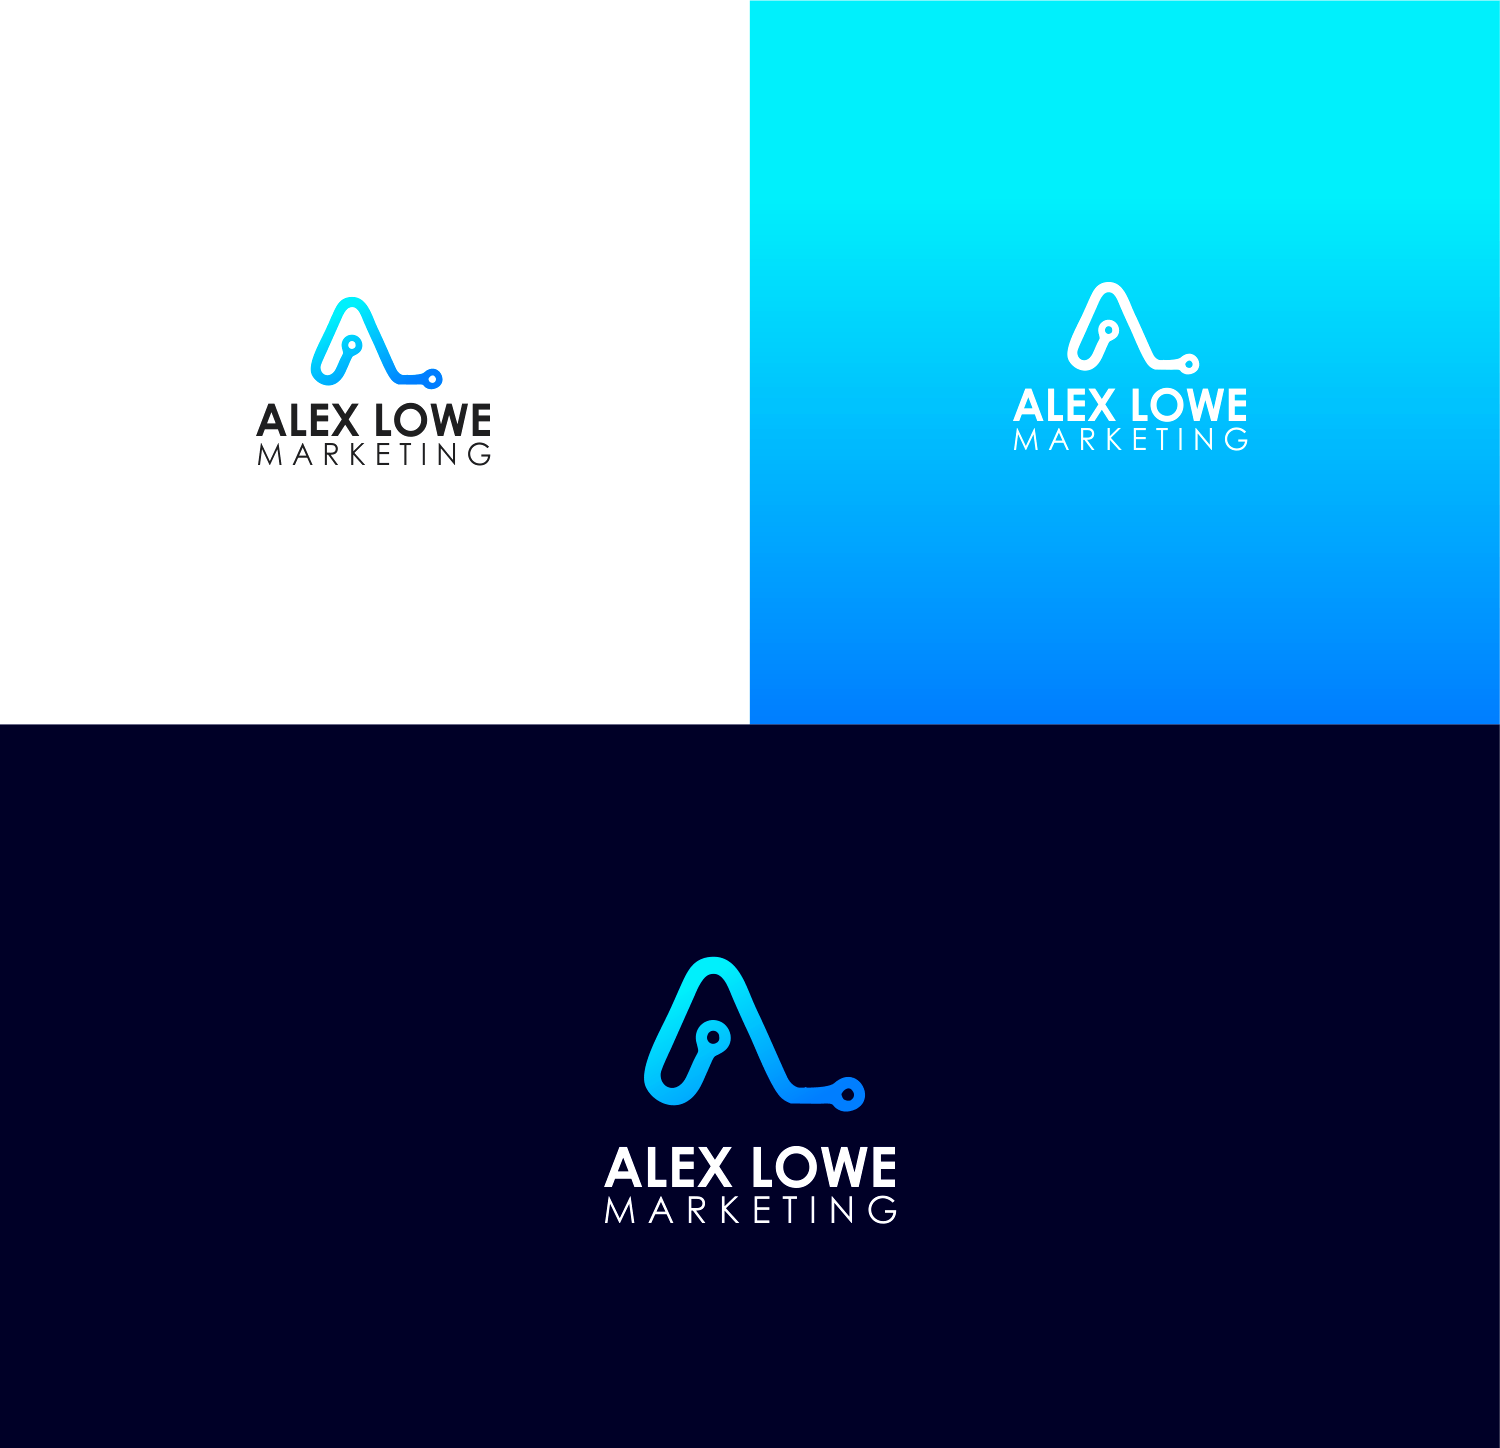 Lowe Logo - Professional, Upmarket, Digital Marketing Logo Design for Alex Lowe ...